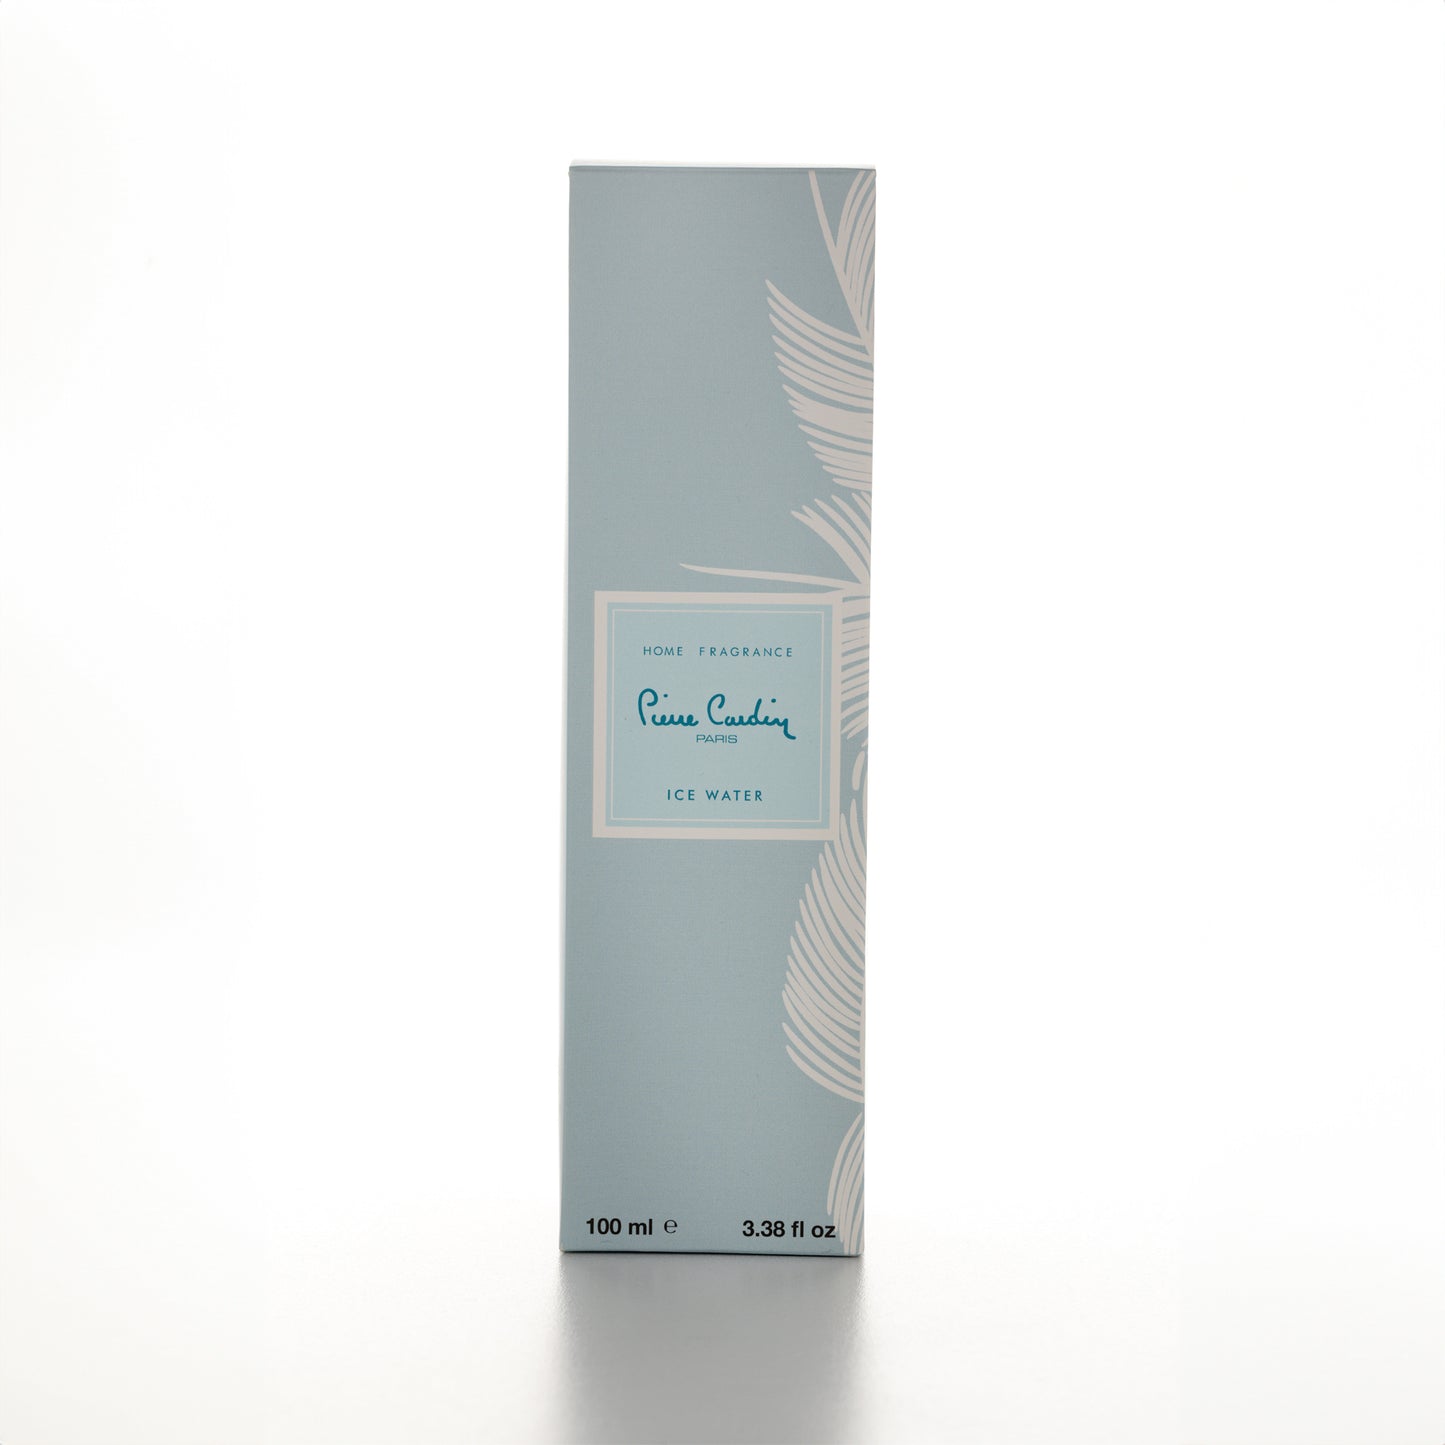 Pierre Cardin Home Fragrance -  ICE WATER 100 ml